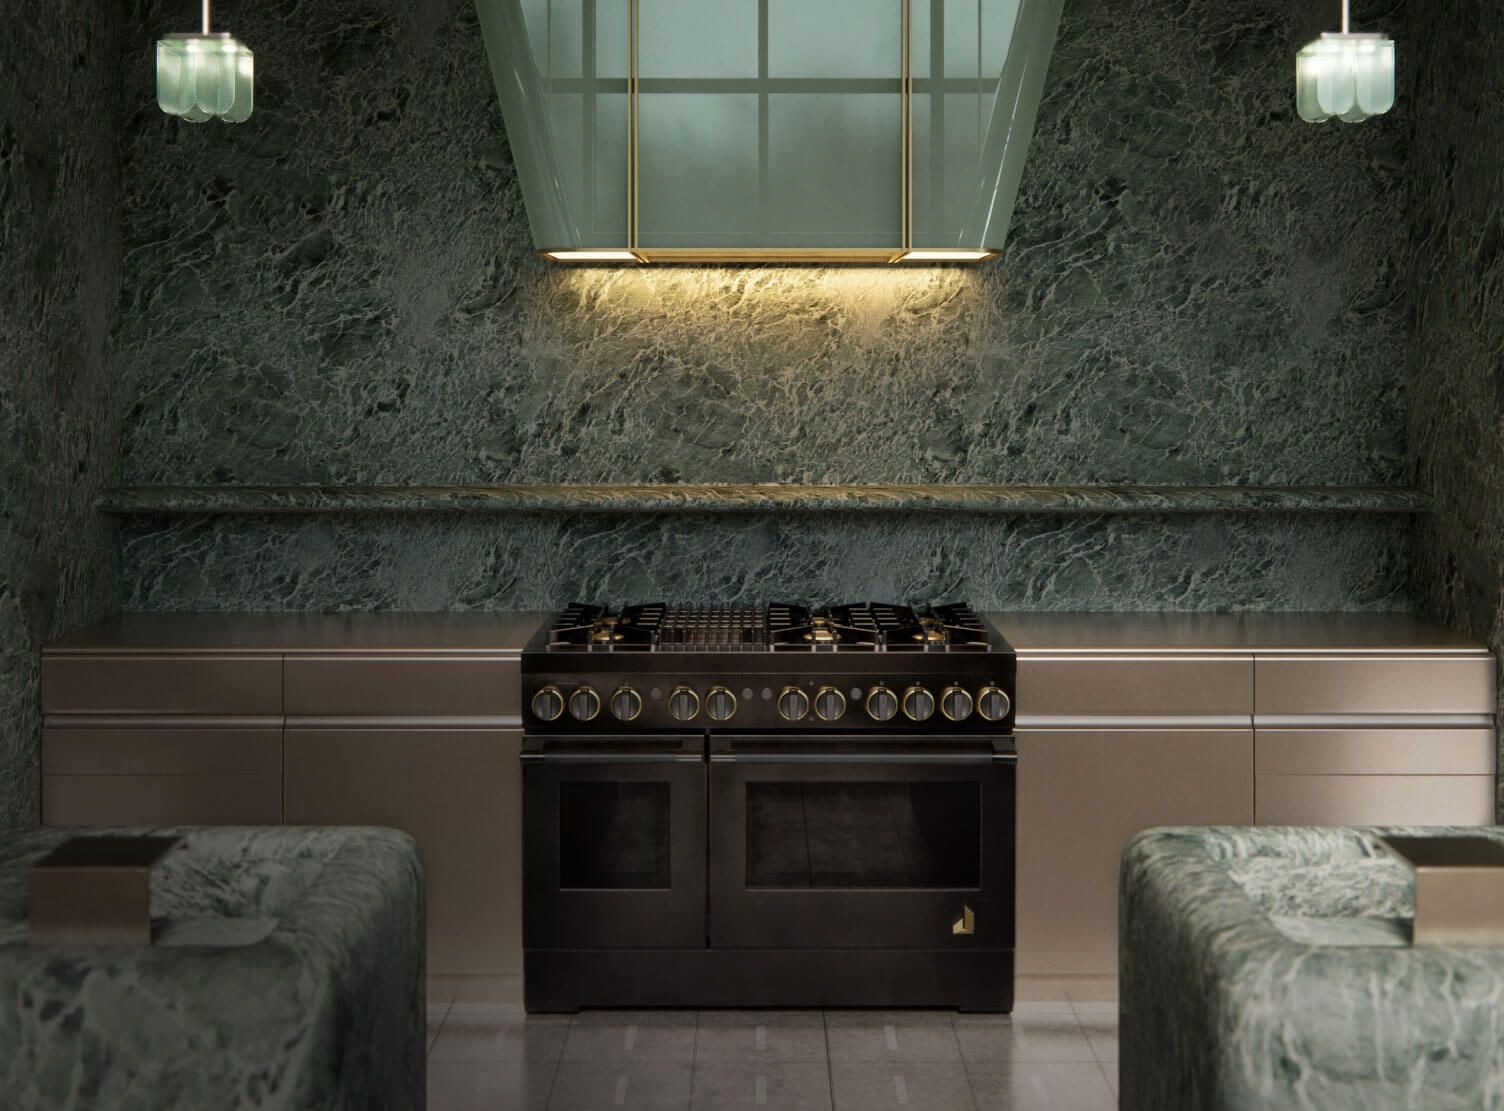 The Smoke & Brass range in a subdued green kitchen designed by Kelly Wearstler. 